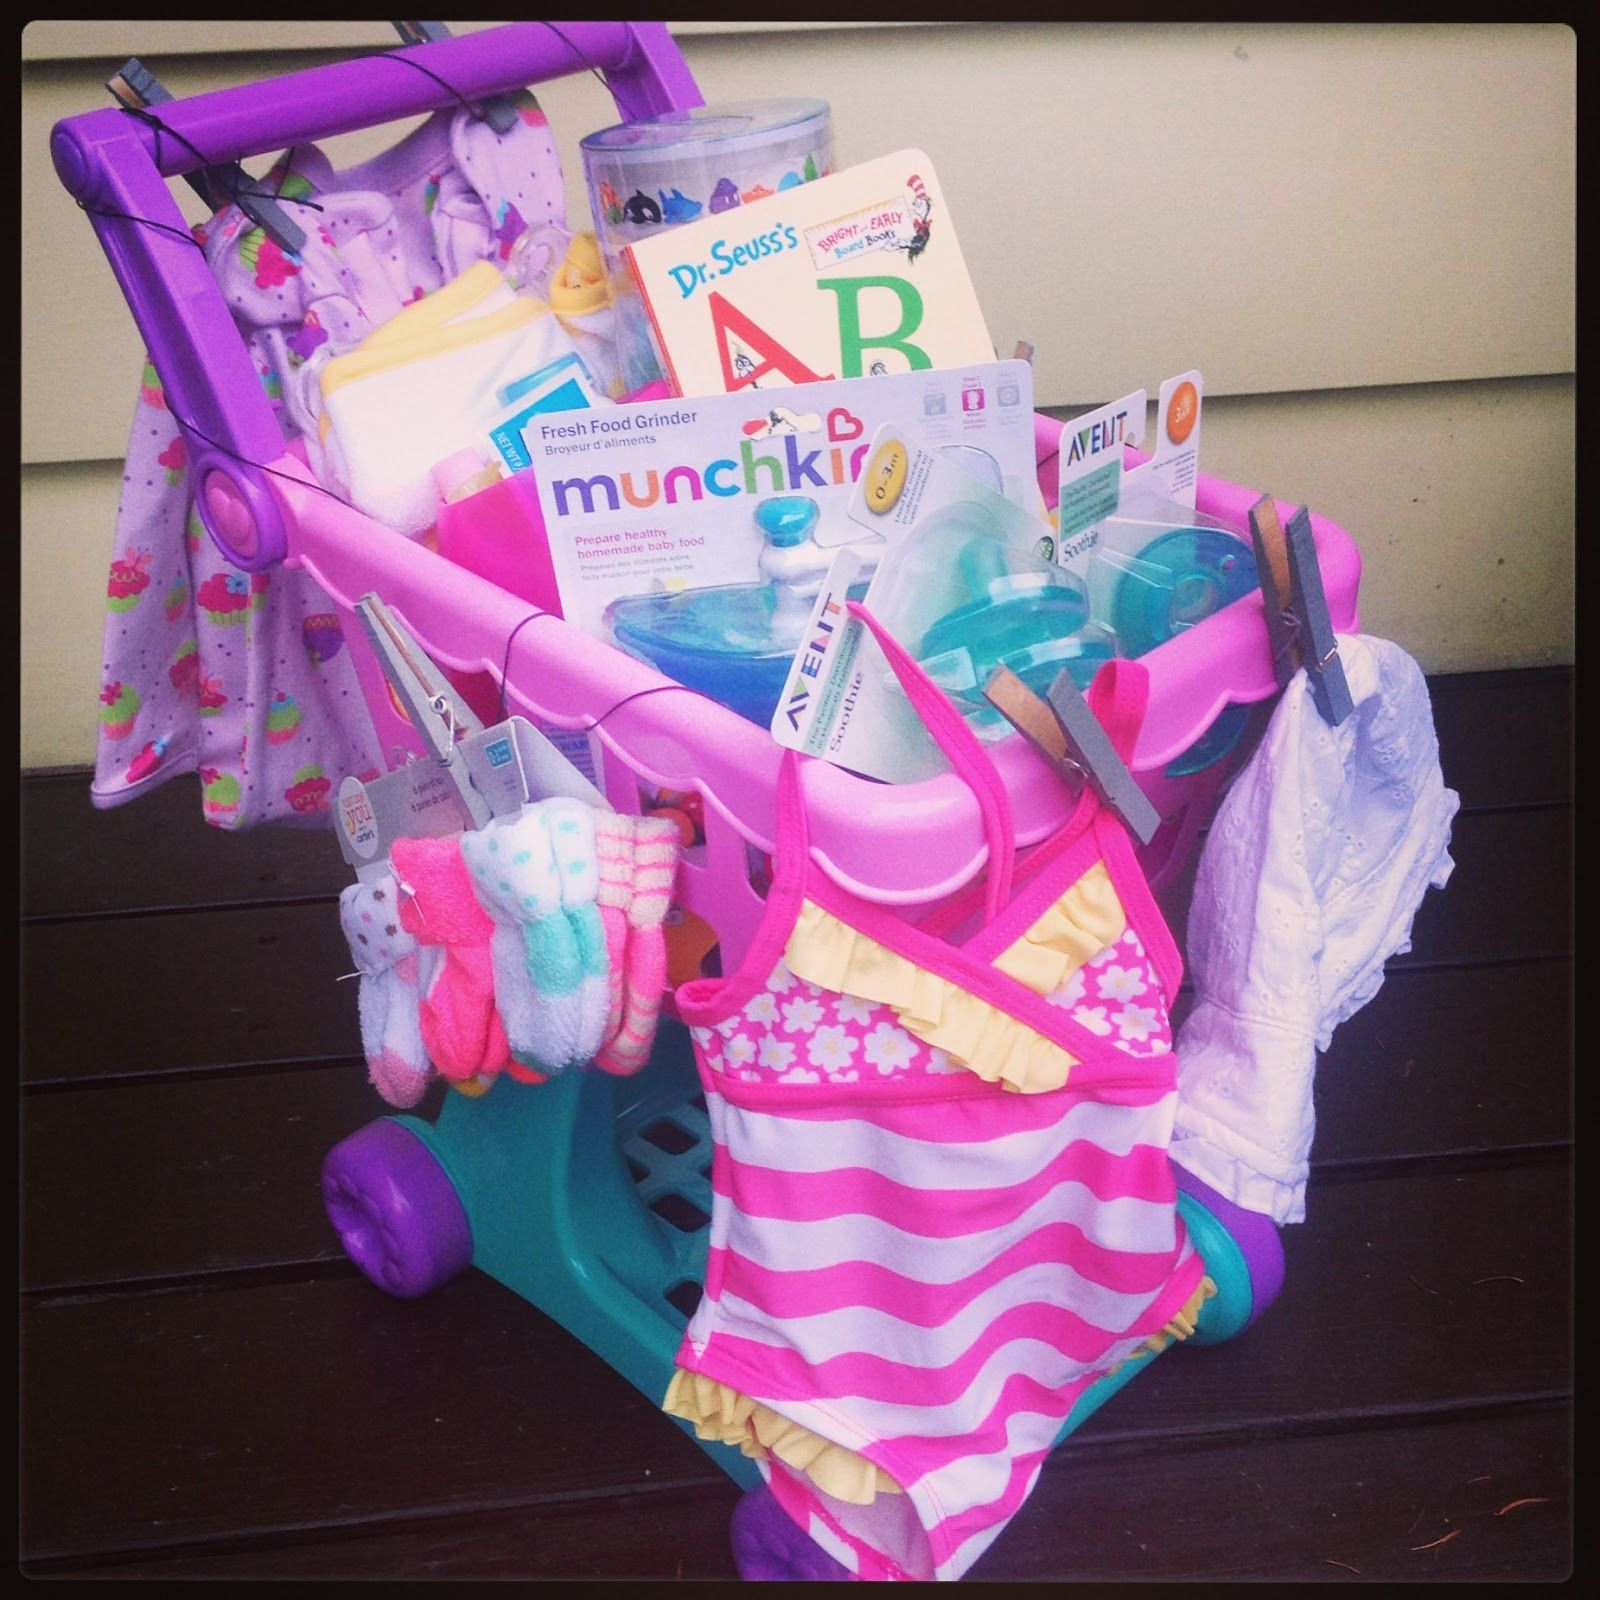 Unique Baby Shower Gift Ideas Pinterest
 Special Baby Shower Gifts is proud to offer unique baby